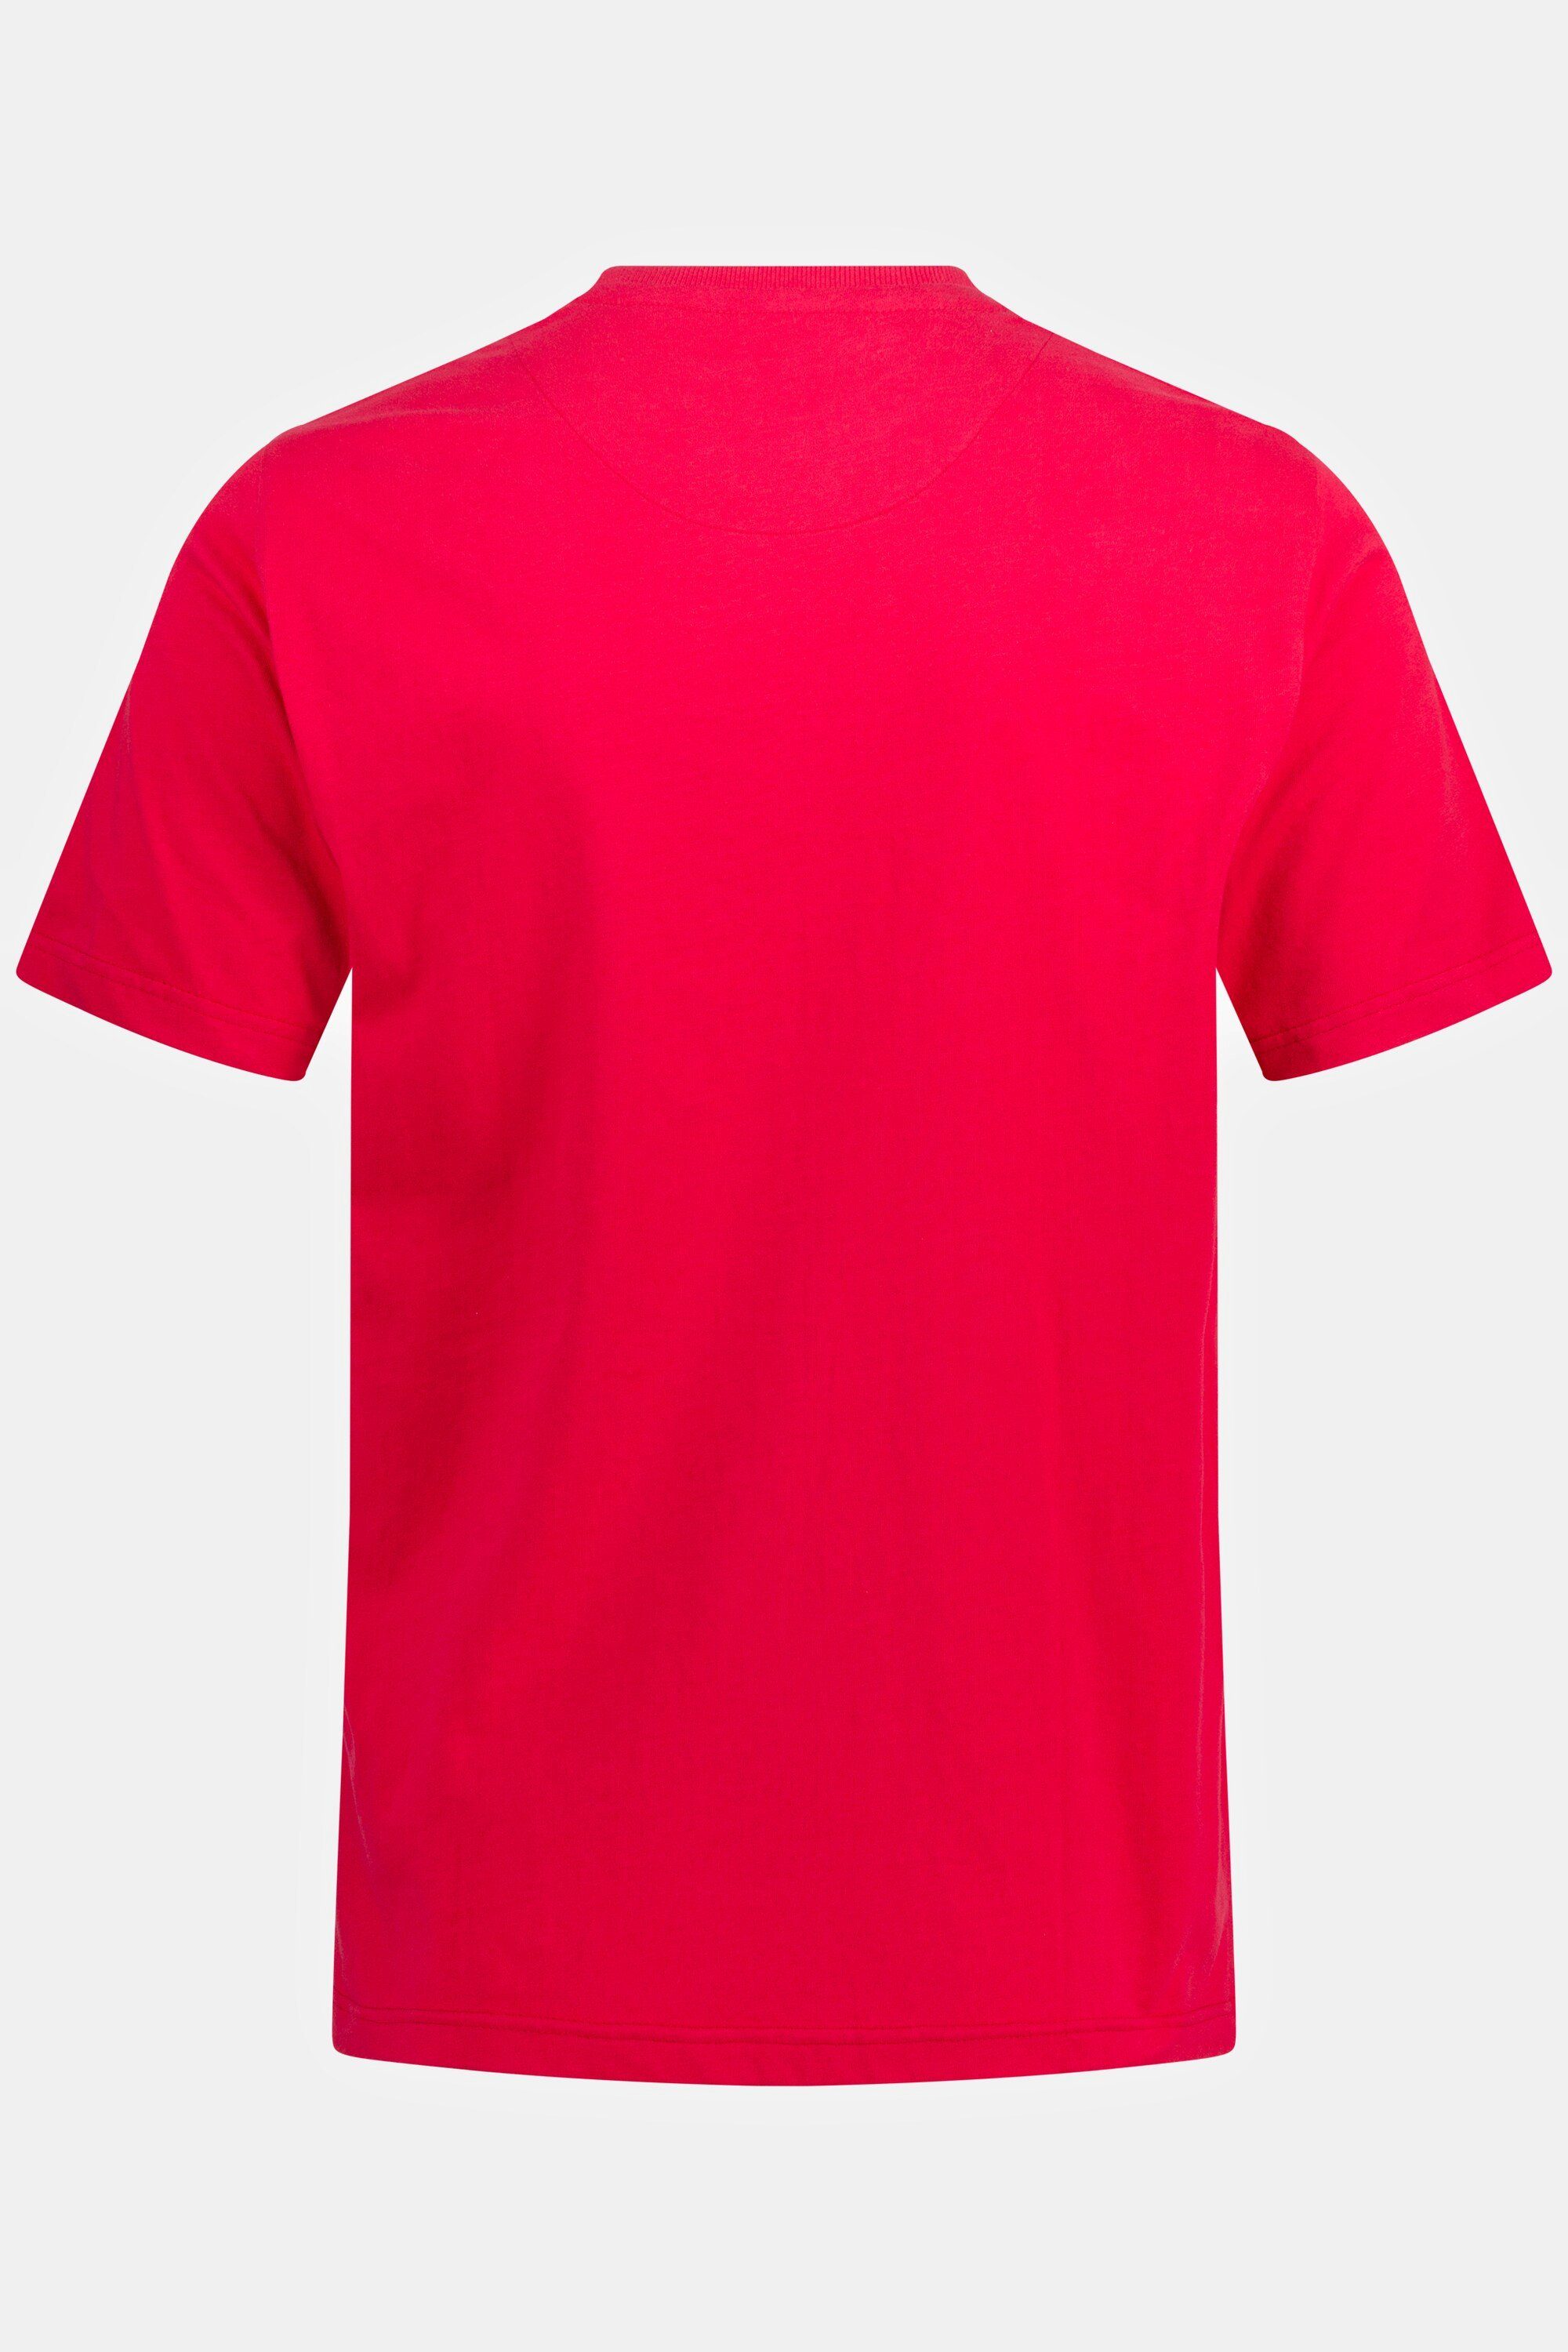 JP1880 T-Shirt T-Shirt Halbarm Print XL bis 8 Rundhals